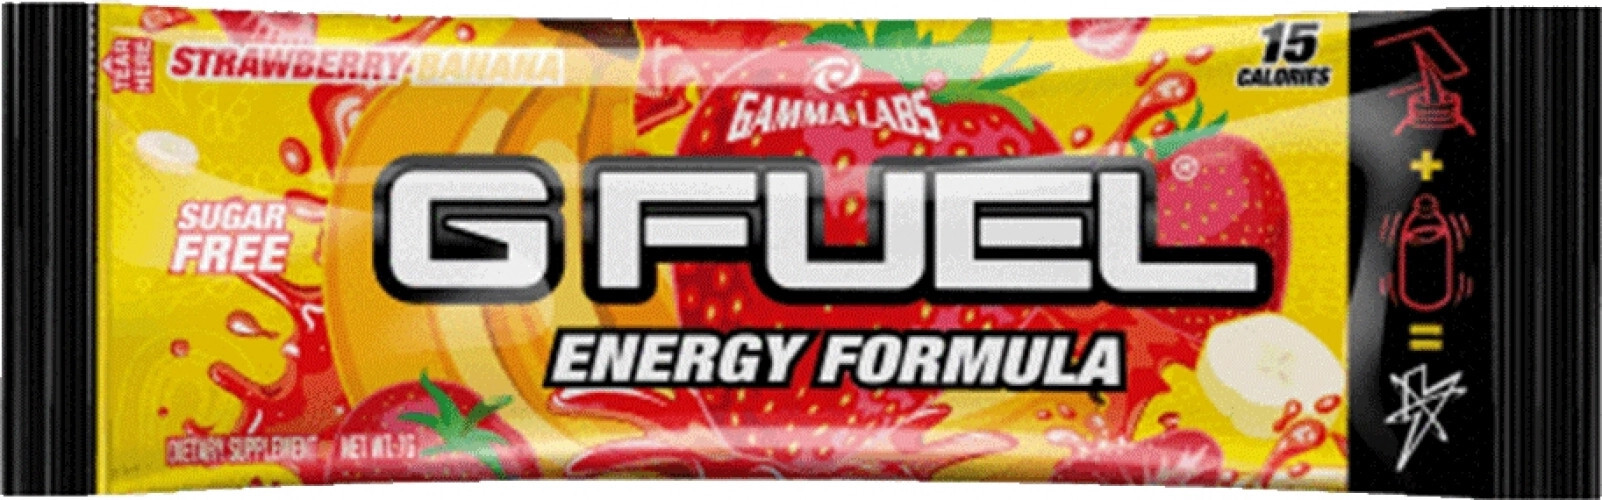 GFuel GFuel Energy Formula - Strawberry Banana Sample